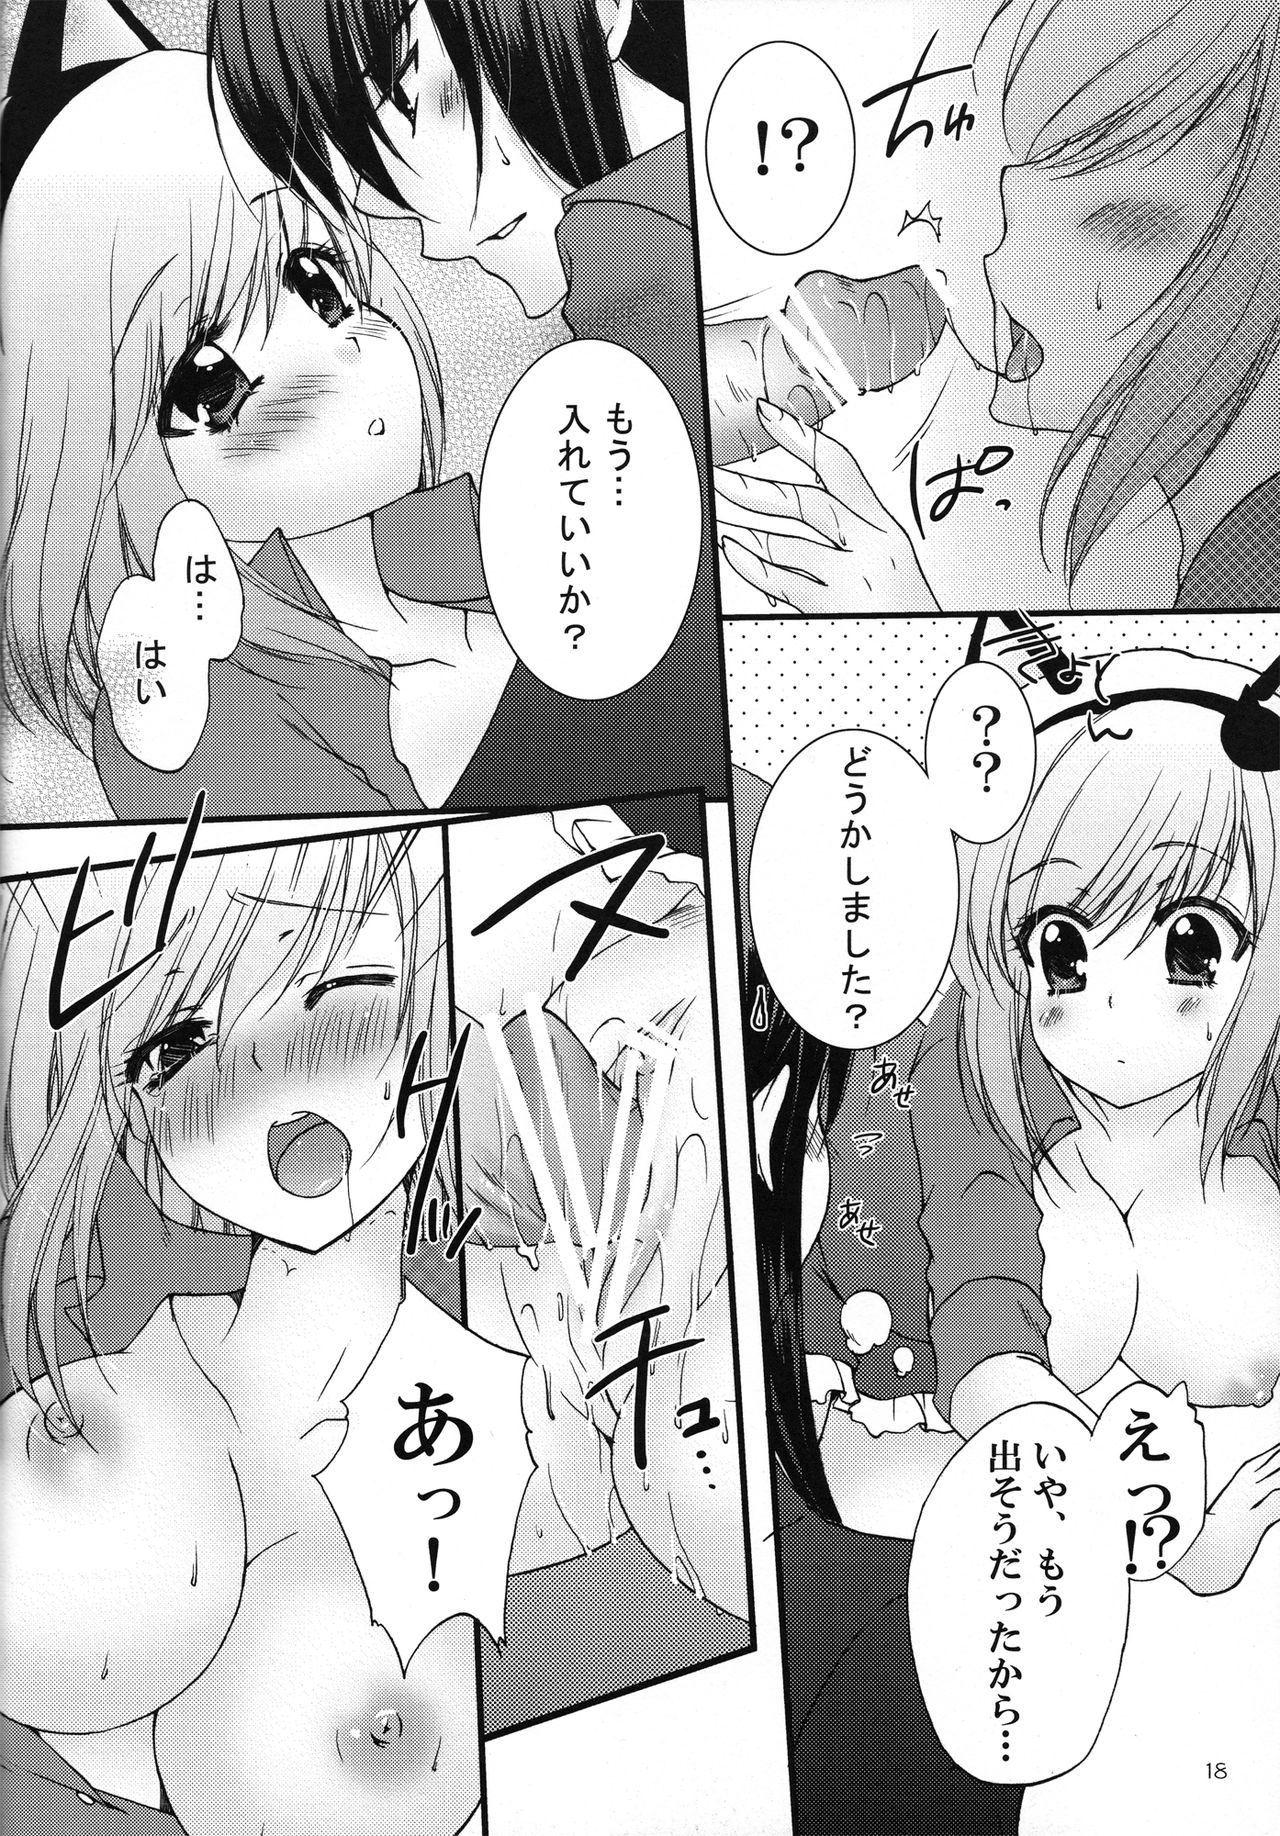 (C77) [Petica (Mikamikan)] Touch me! (Tales of Vesperia) (C77) [ペチカ (みかみかん)] Touch me! (テイルズオブヴェスペリア)